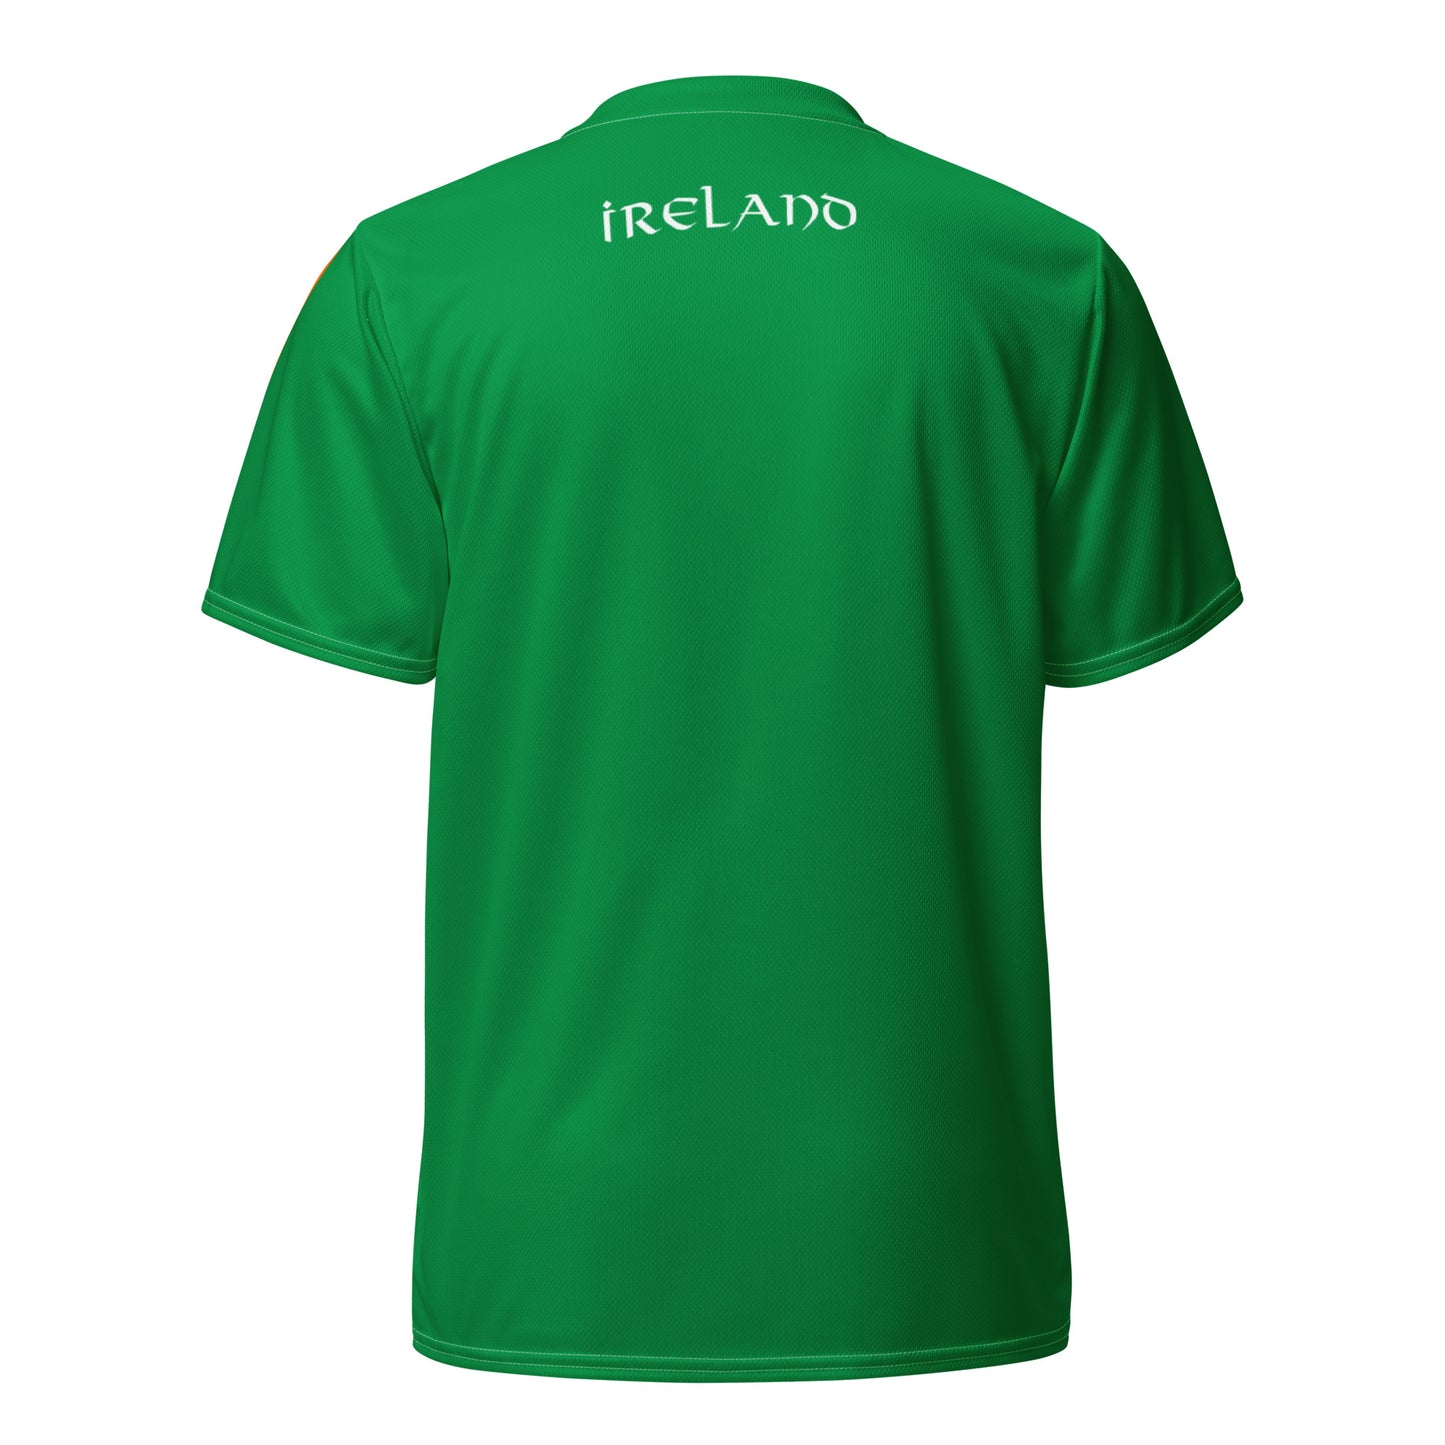 Ireland sports shirt